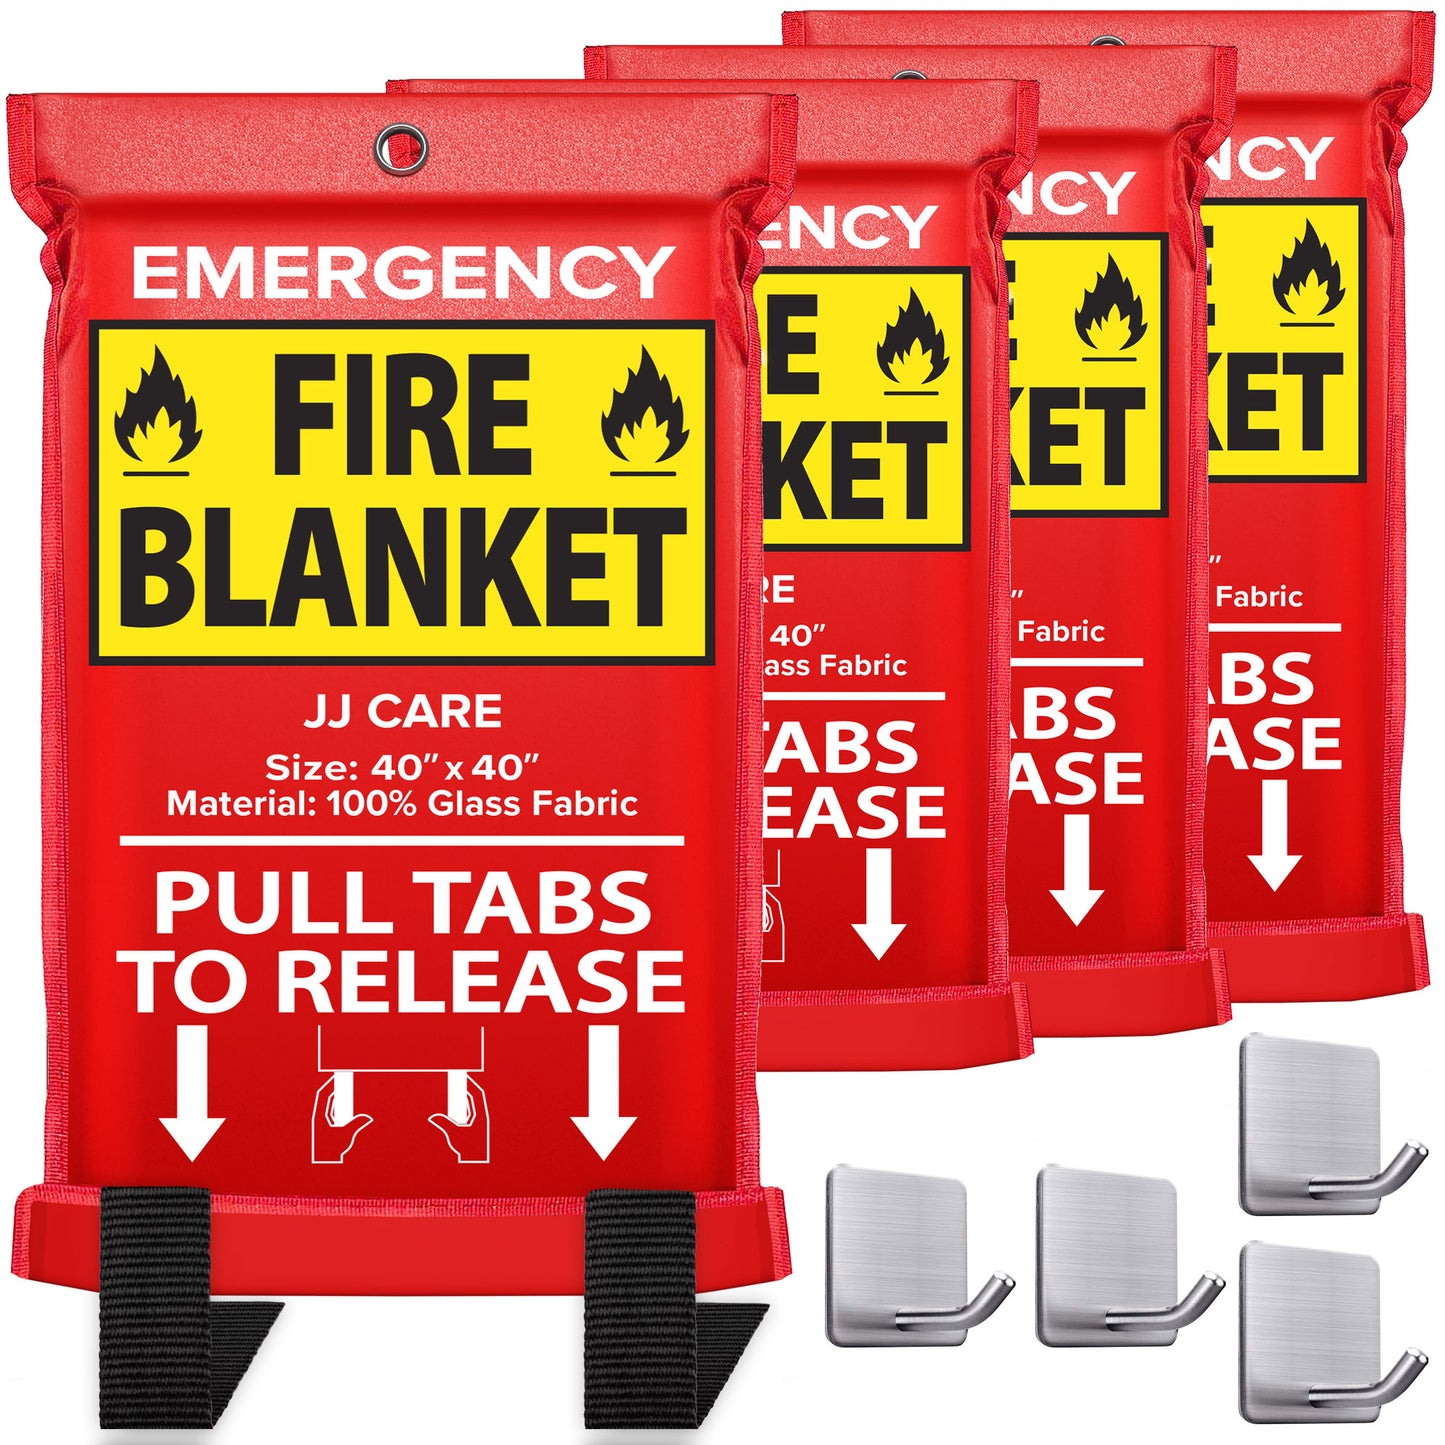 JJ CARE Fire Blanket